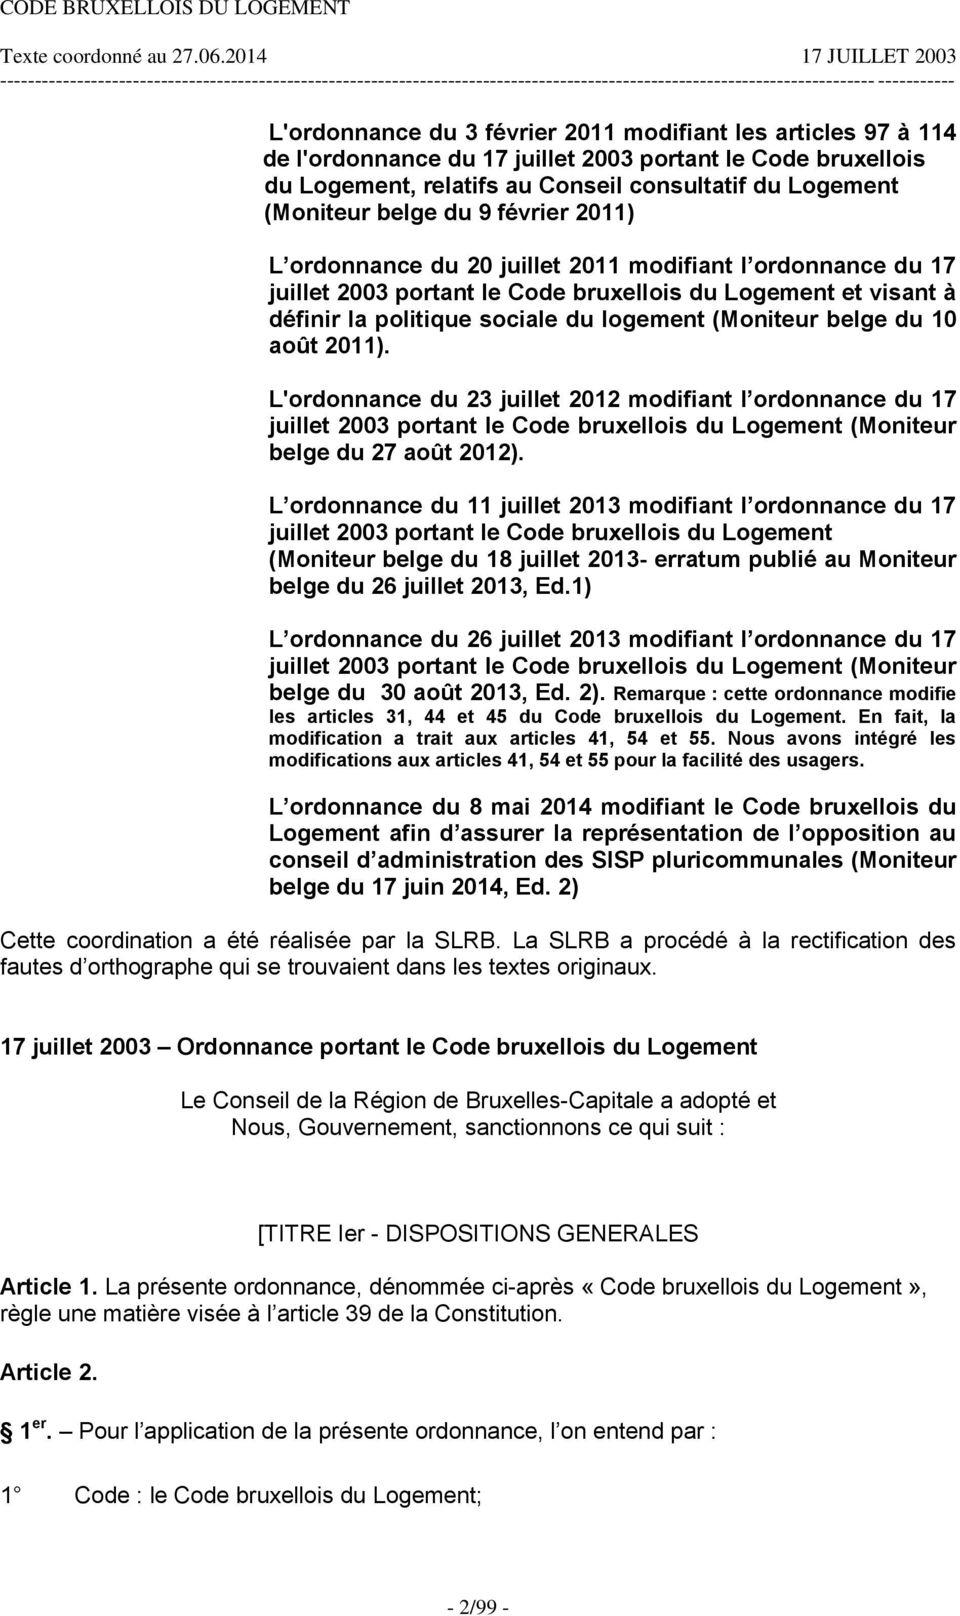 belge du 10 août 2011). L'ordonnance du 23 juillet 2012 modifiant l ordonnance du 17 juillet 2003 portant le Code bruxellois du Logement (Moniteur belge du 27 août 2012).